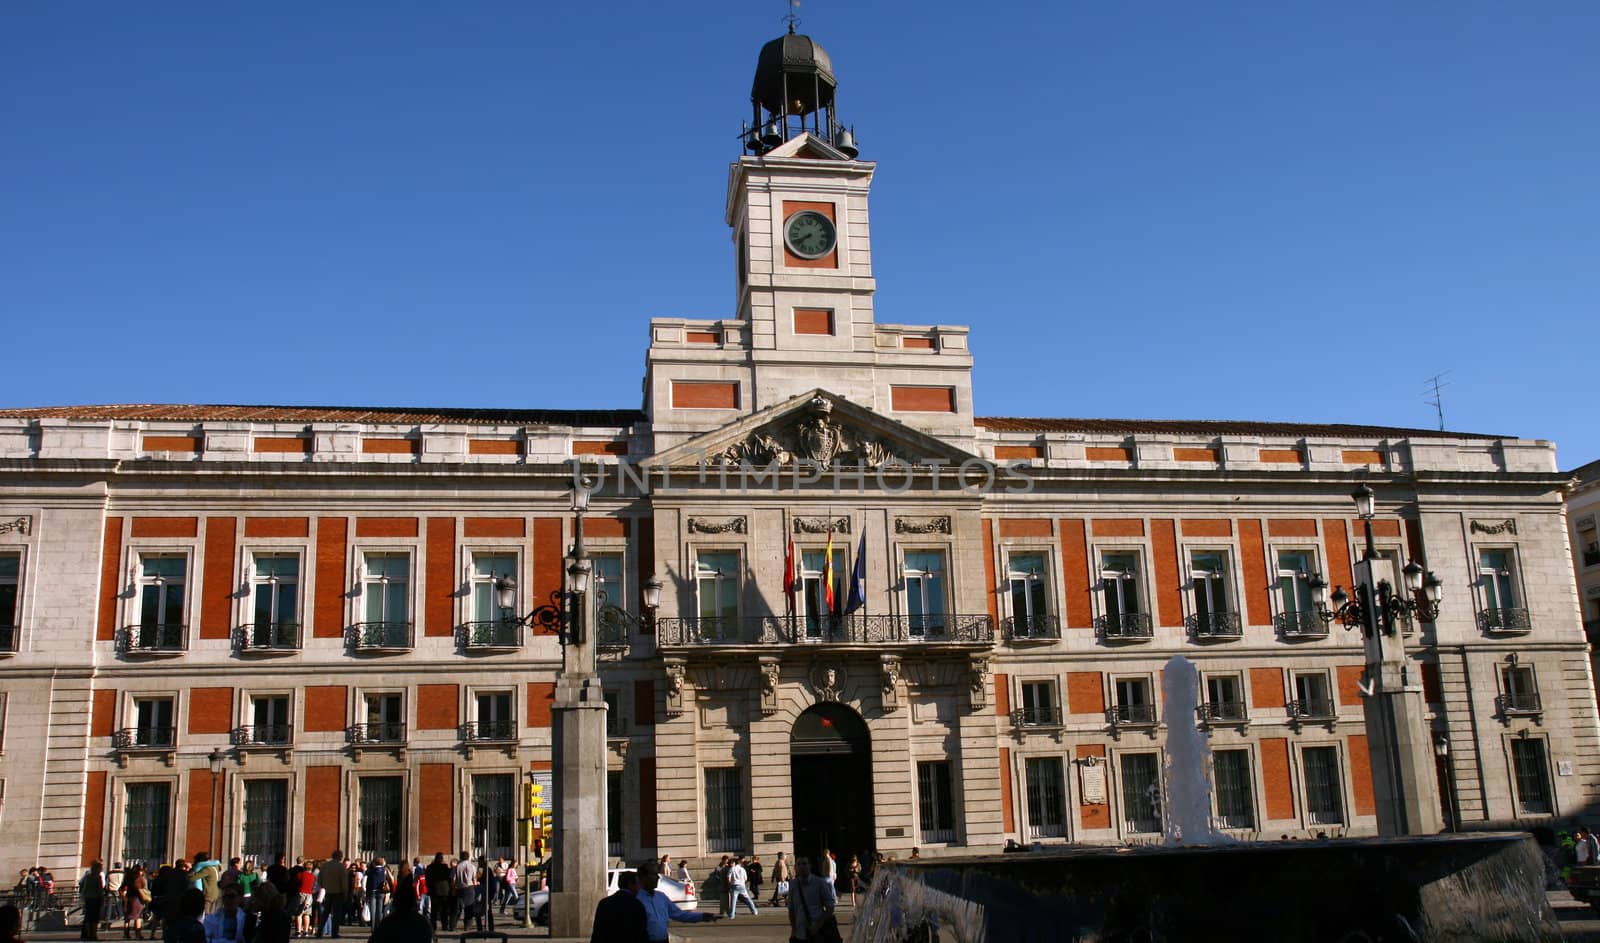 Old Post Office on Madrid's Puerta del Sol by mrfocus